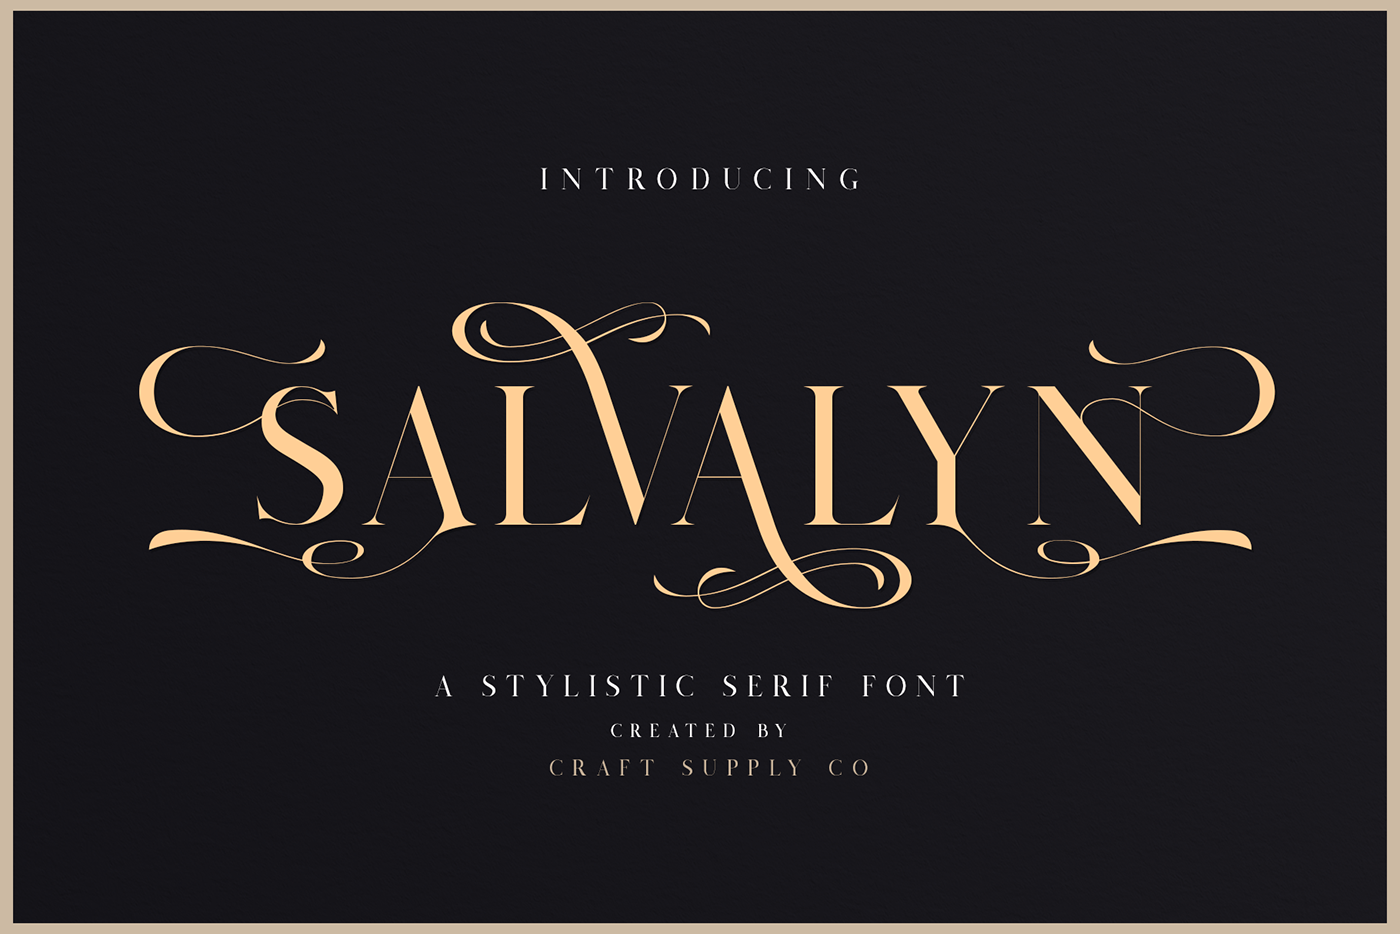 Free font download freebies vintage serif handwritten Display free Typeface decorative